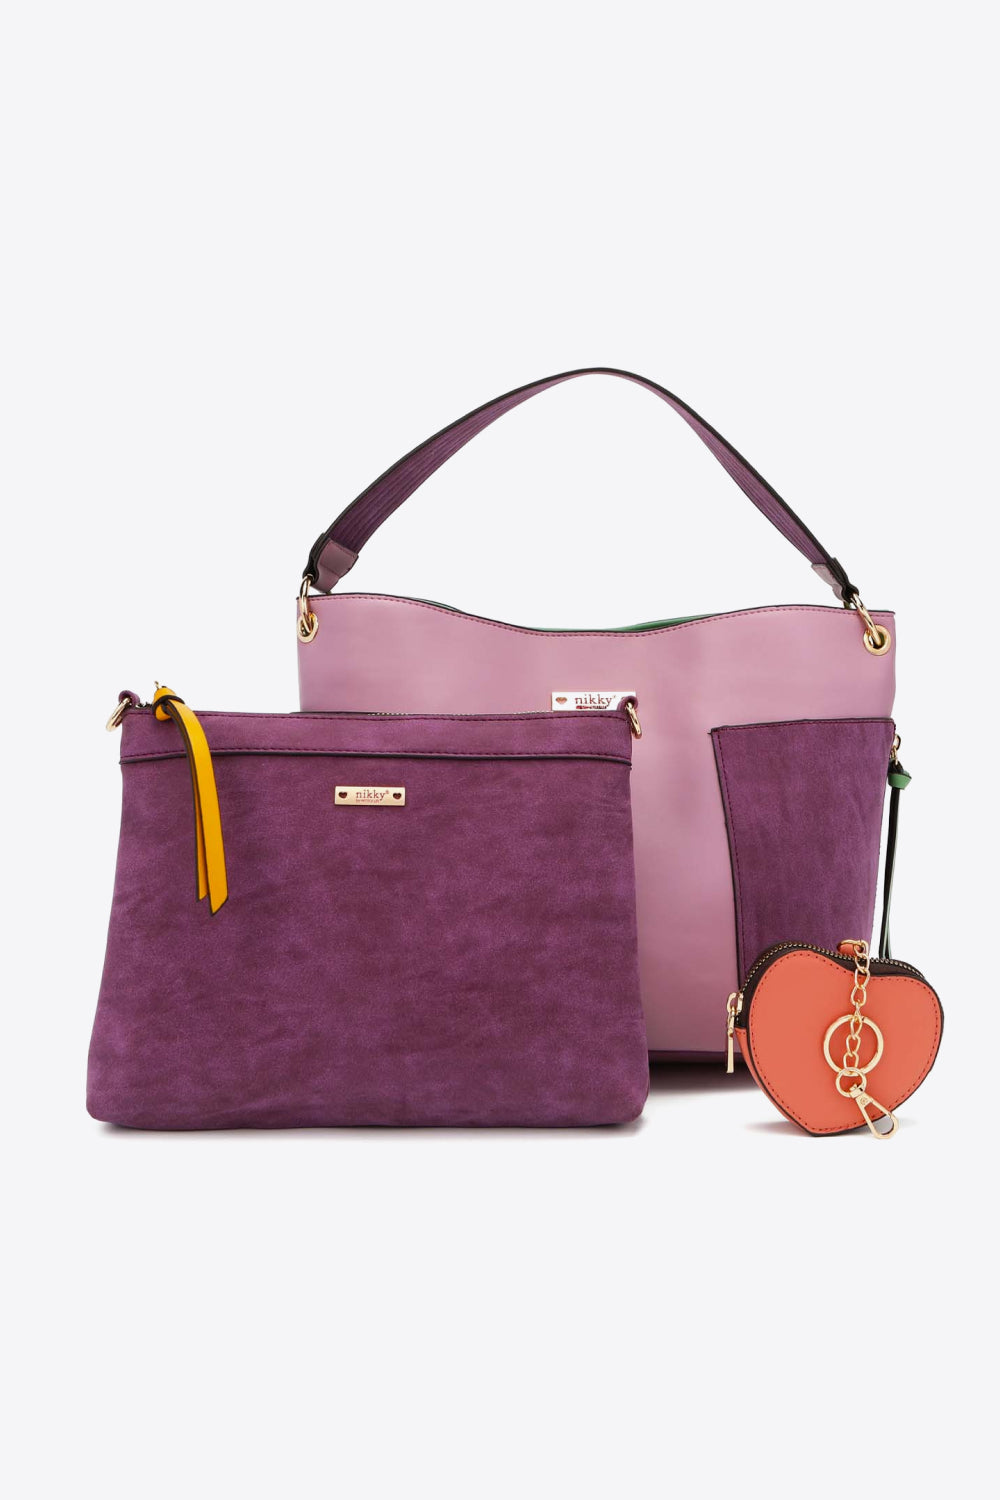 Nicole Lee USA Sweetheart Handbag Set - Dash Trend